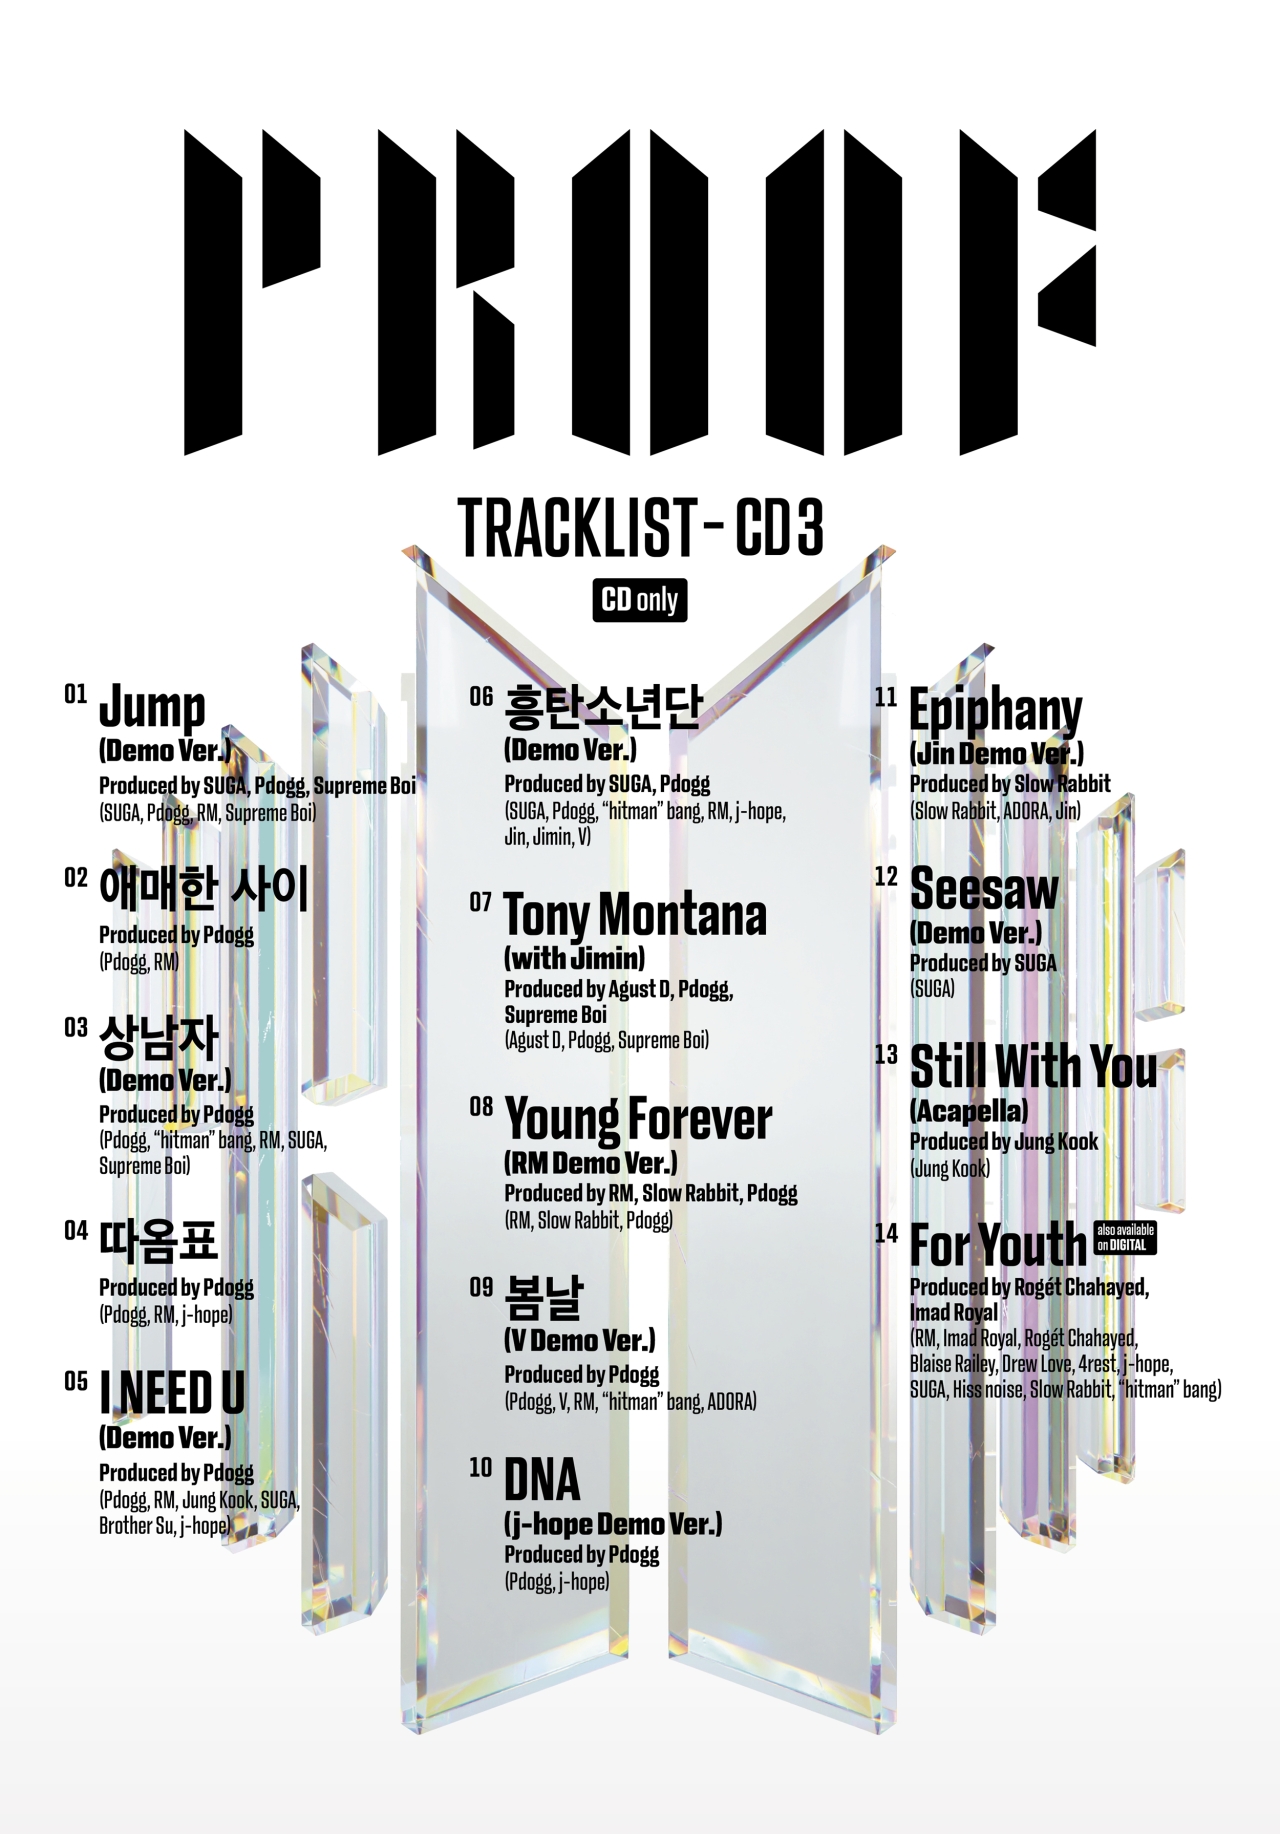 Track-list of BTS' 